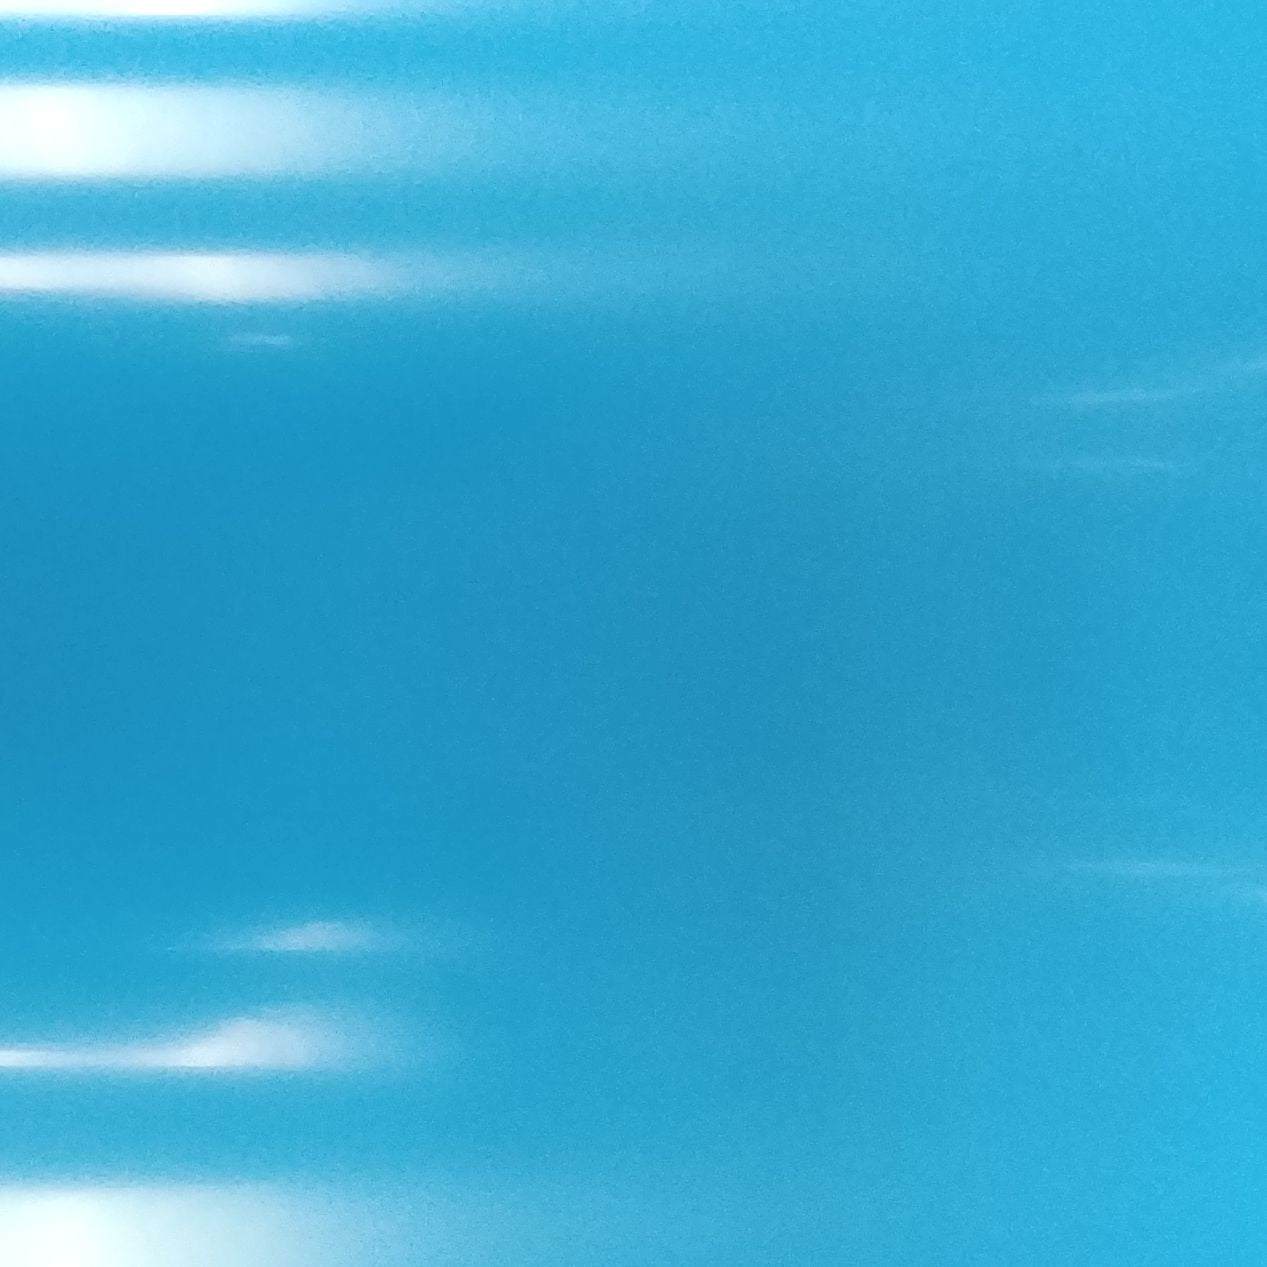 DecoFilm Gloss HTV-Neon Blue Choose Your Length CLEARANCE